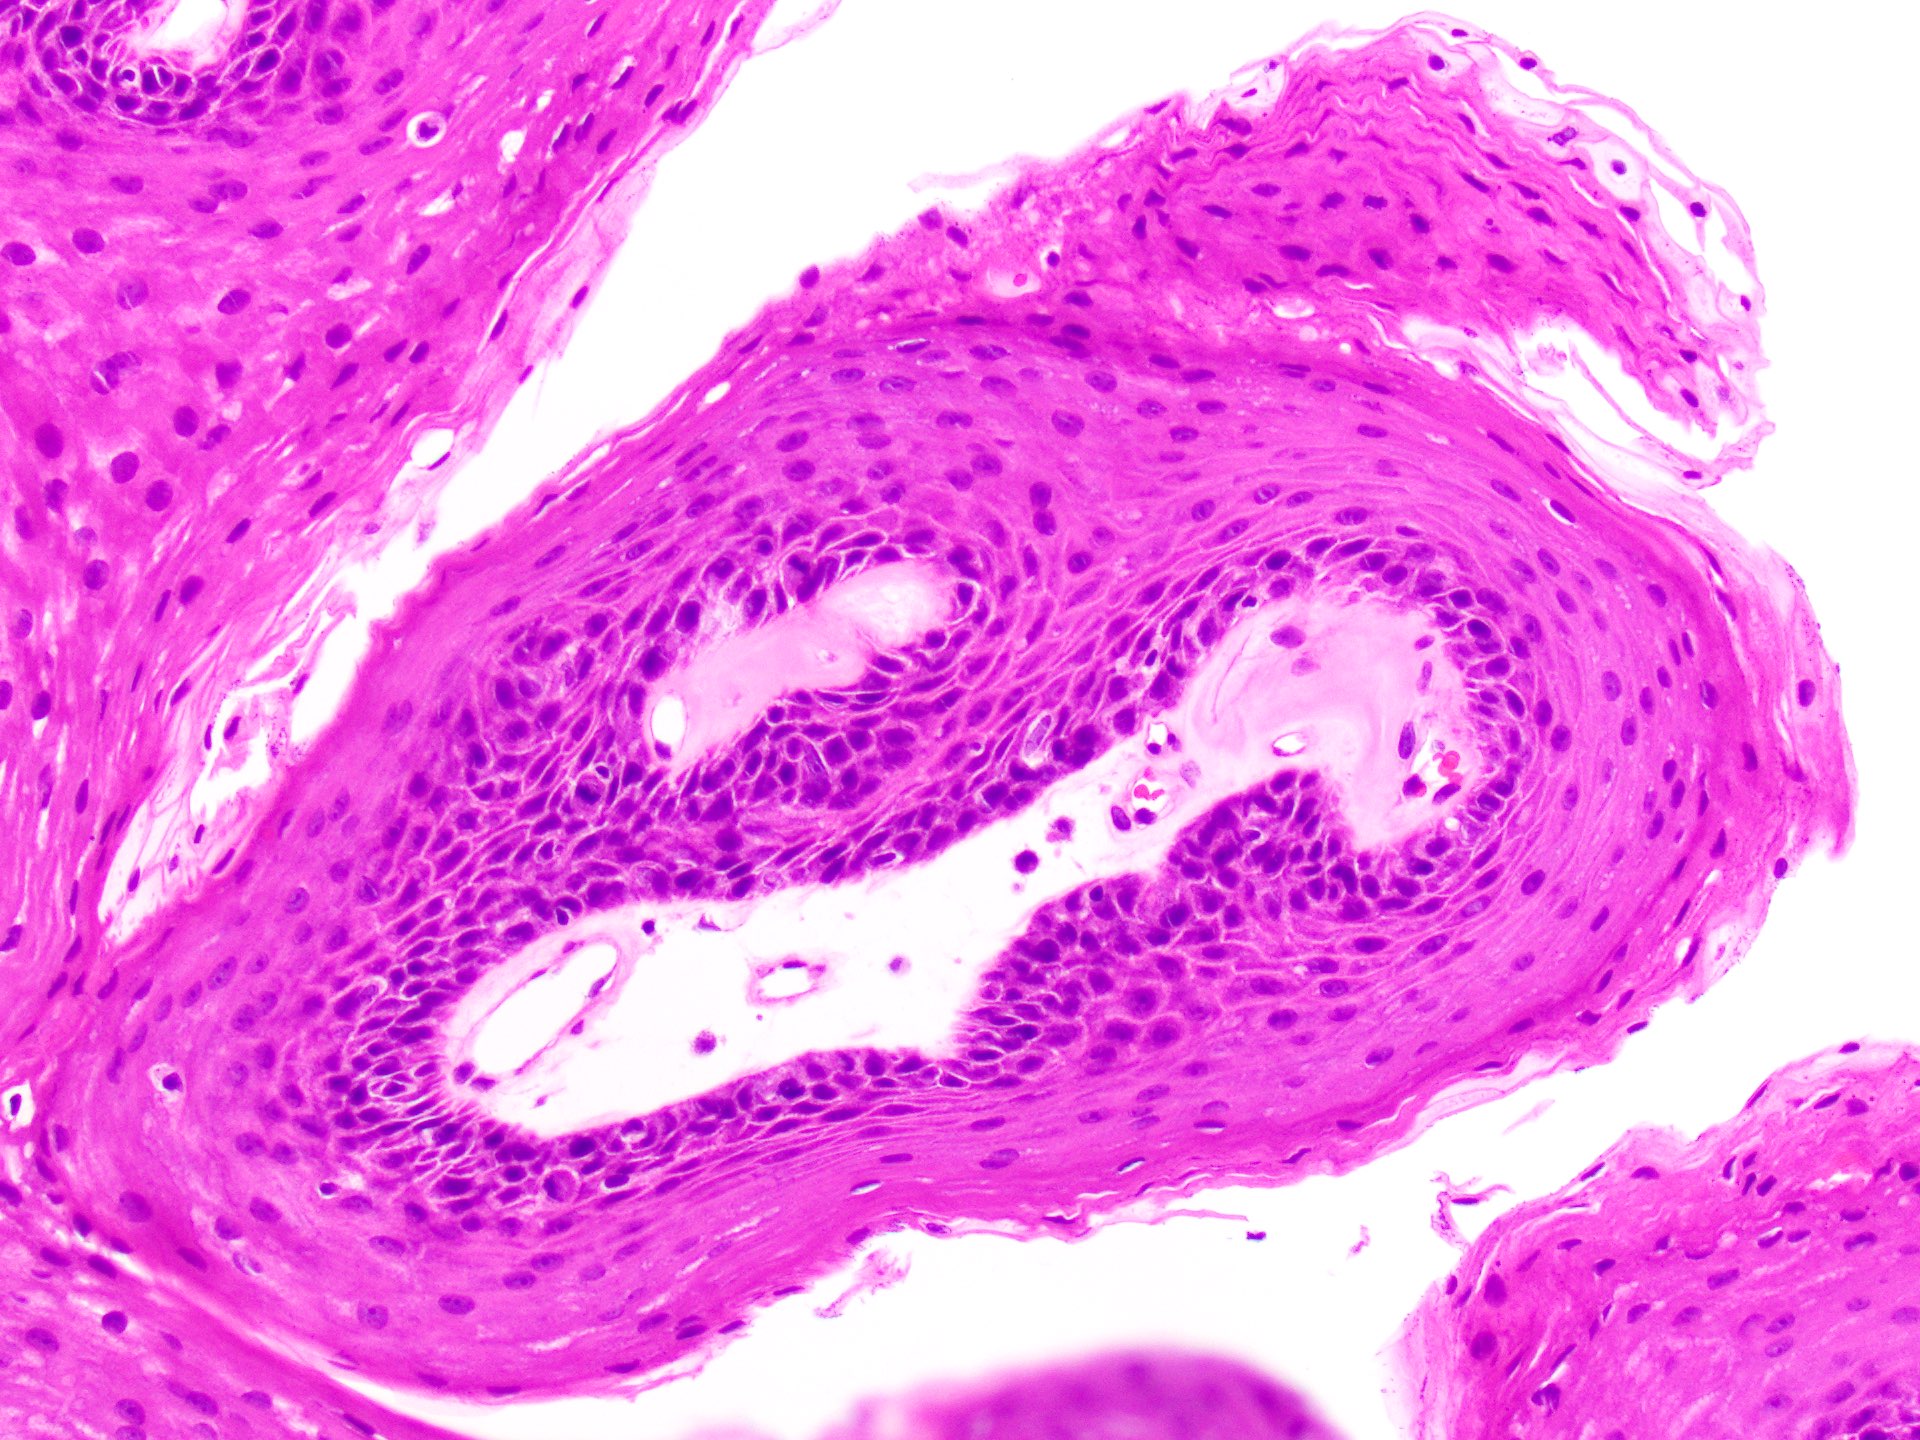 squamous cell papilloma skin pathology outlines)